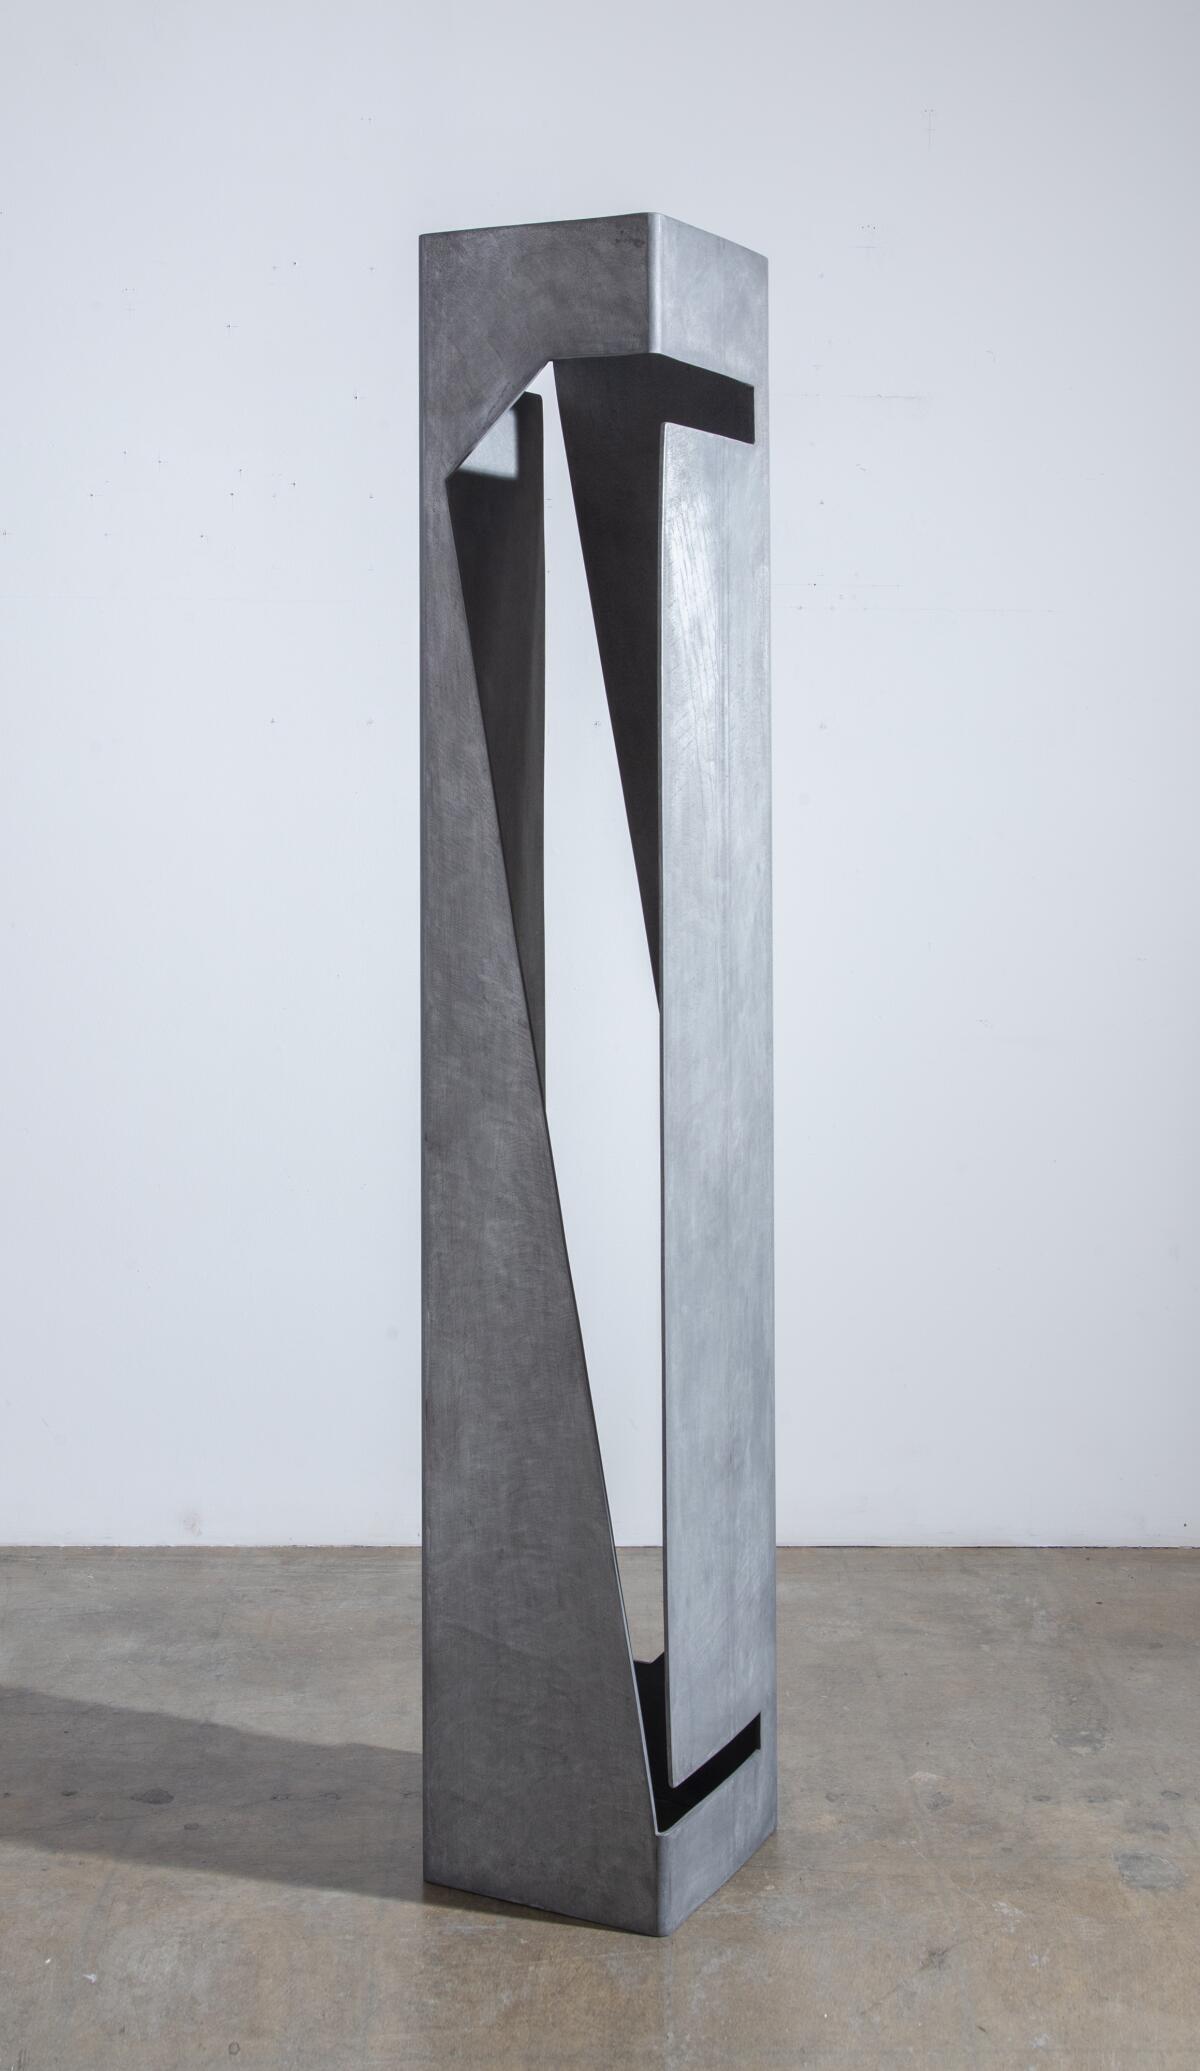 Quint Gallery presents “Kenneth Capps: Prism/Index” through Saturday, Jan. 21, in La Jolla.